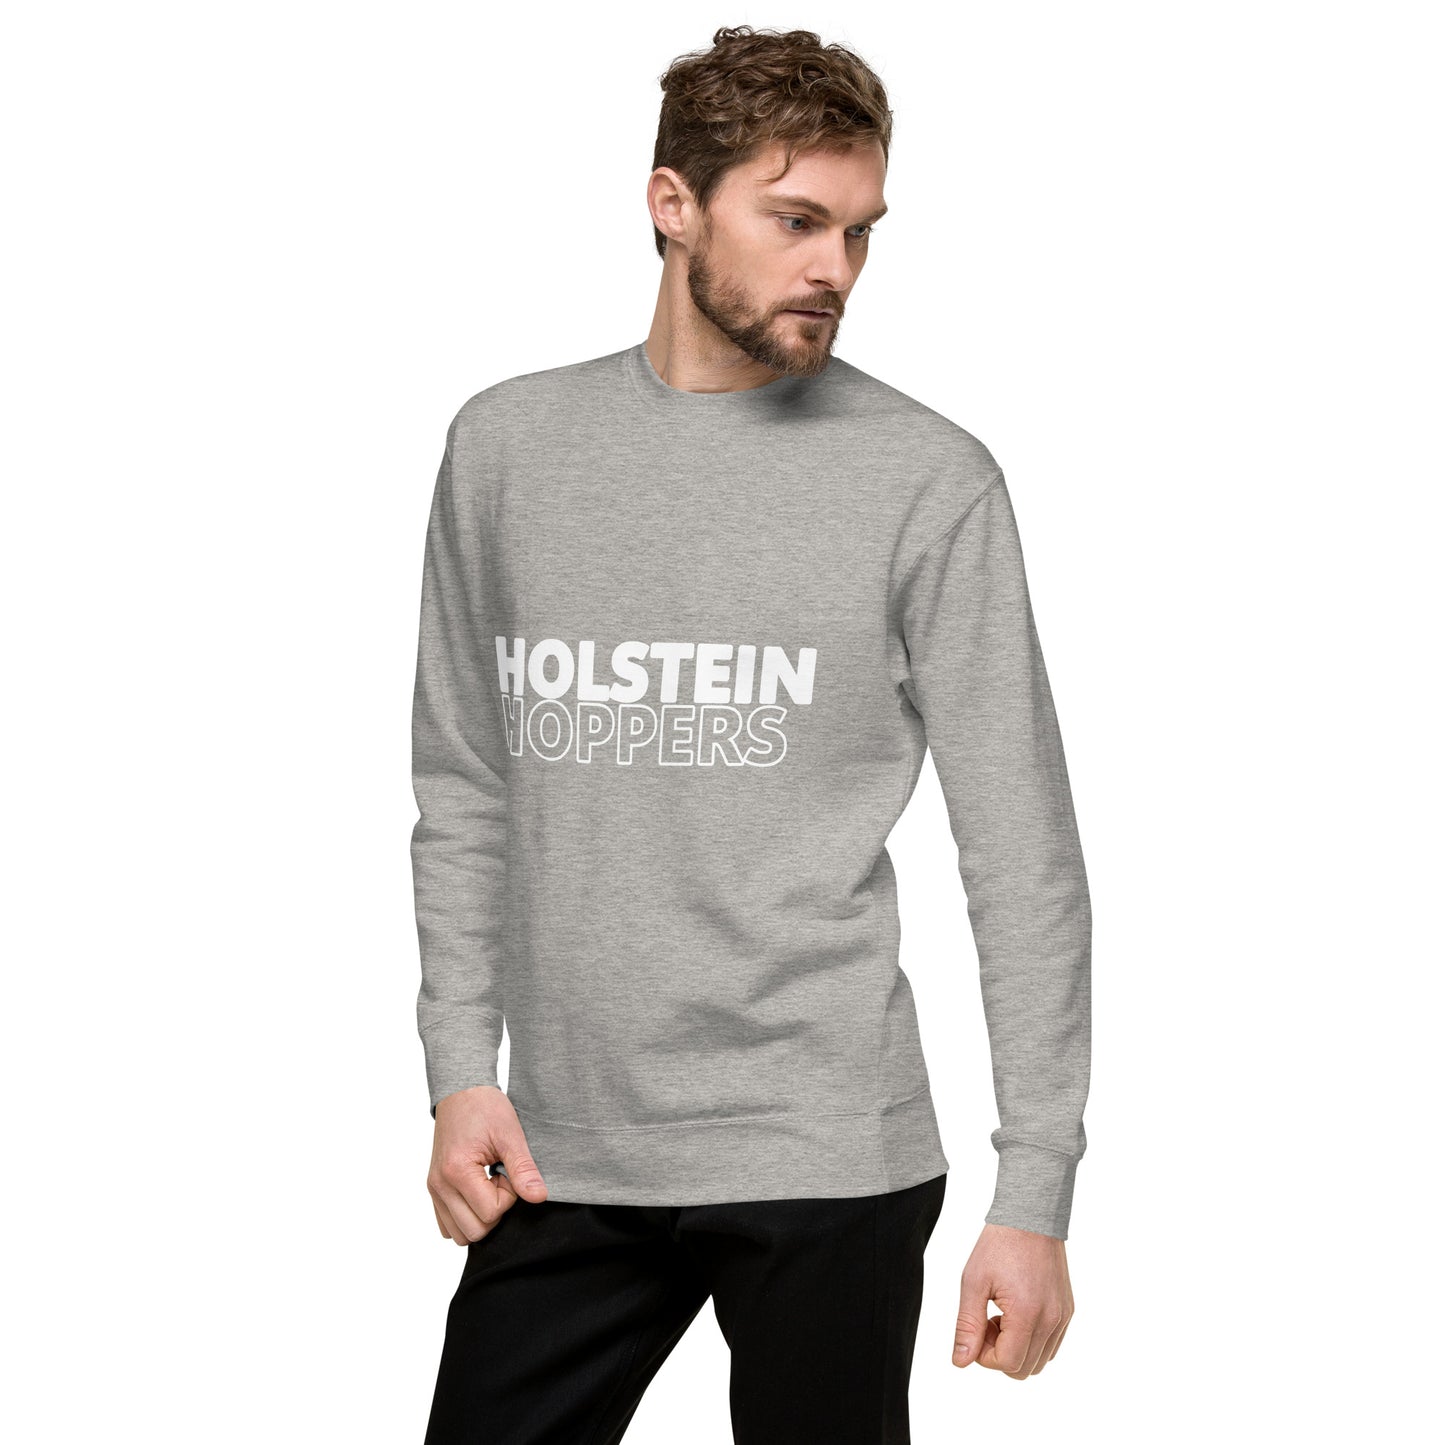 Sweater | Holstein Hoppers